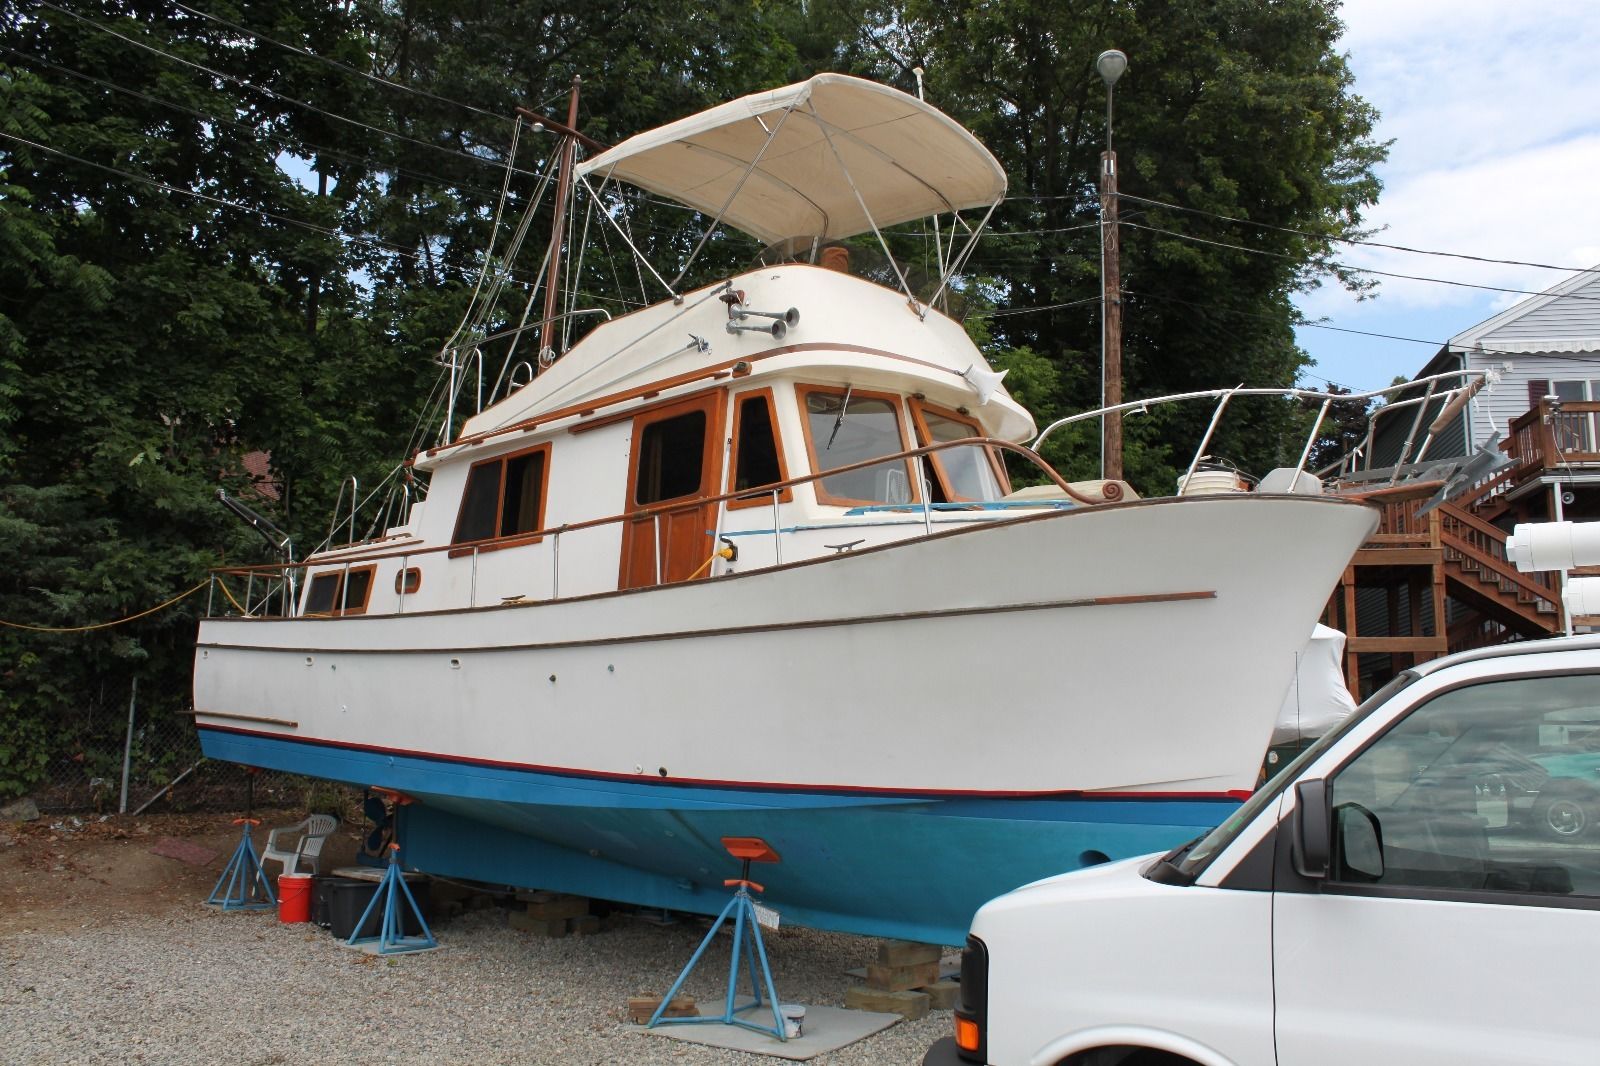 marine trader marine trader trawler 1980 for sale for